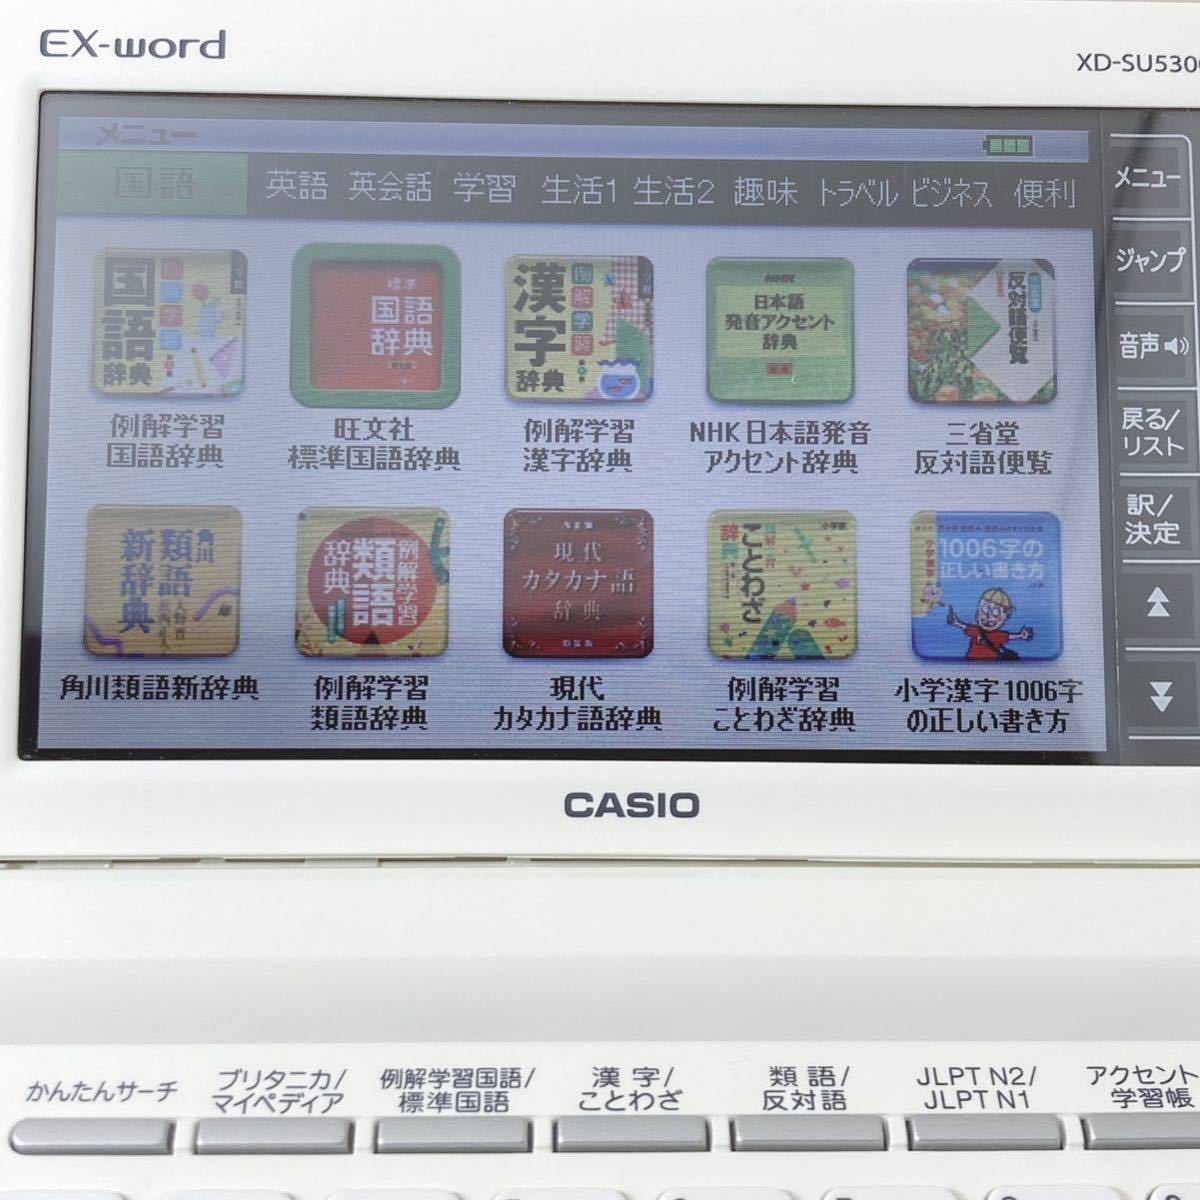  beautiful goods Θ Japanese study model computerized dictionary XD-SU5300 accessory set Japanese ability examination measures ΘI57